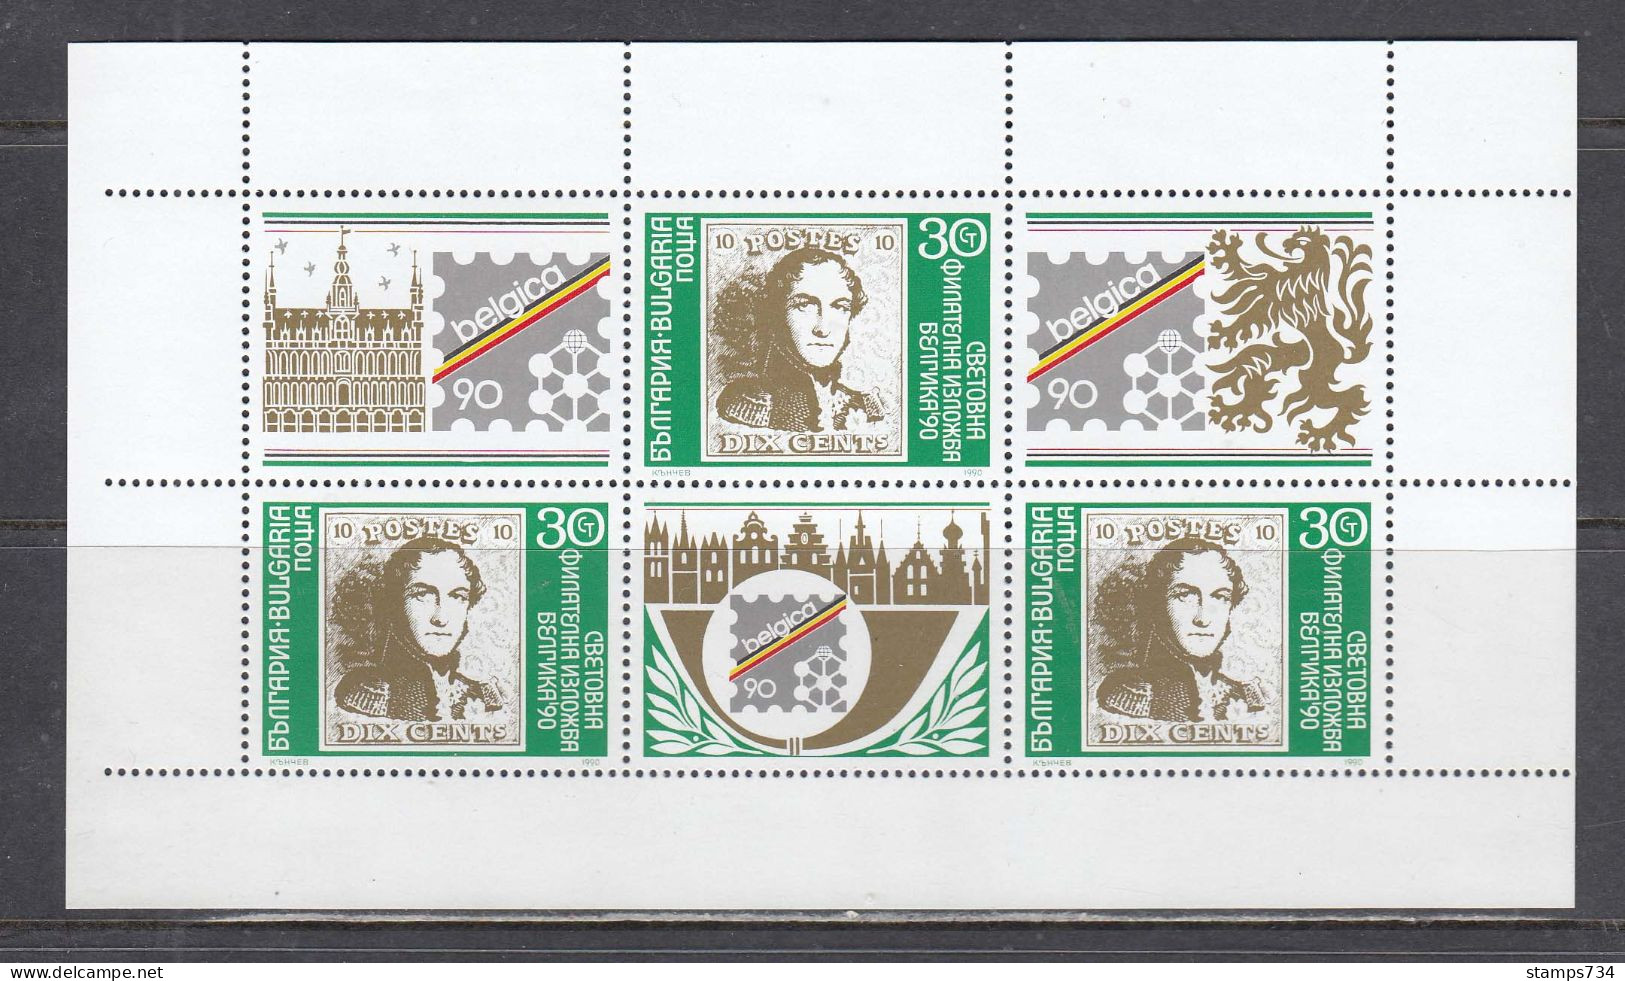 Bulgaria 1990 - International Stamp Exhibition BELGICA'90, Mi-Nr. 3838 In Sheet, MNH** - Ongebruikt